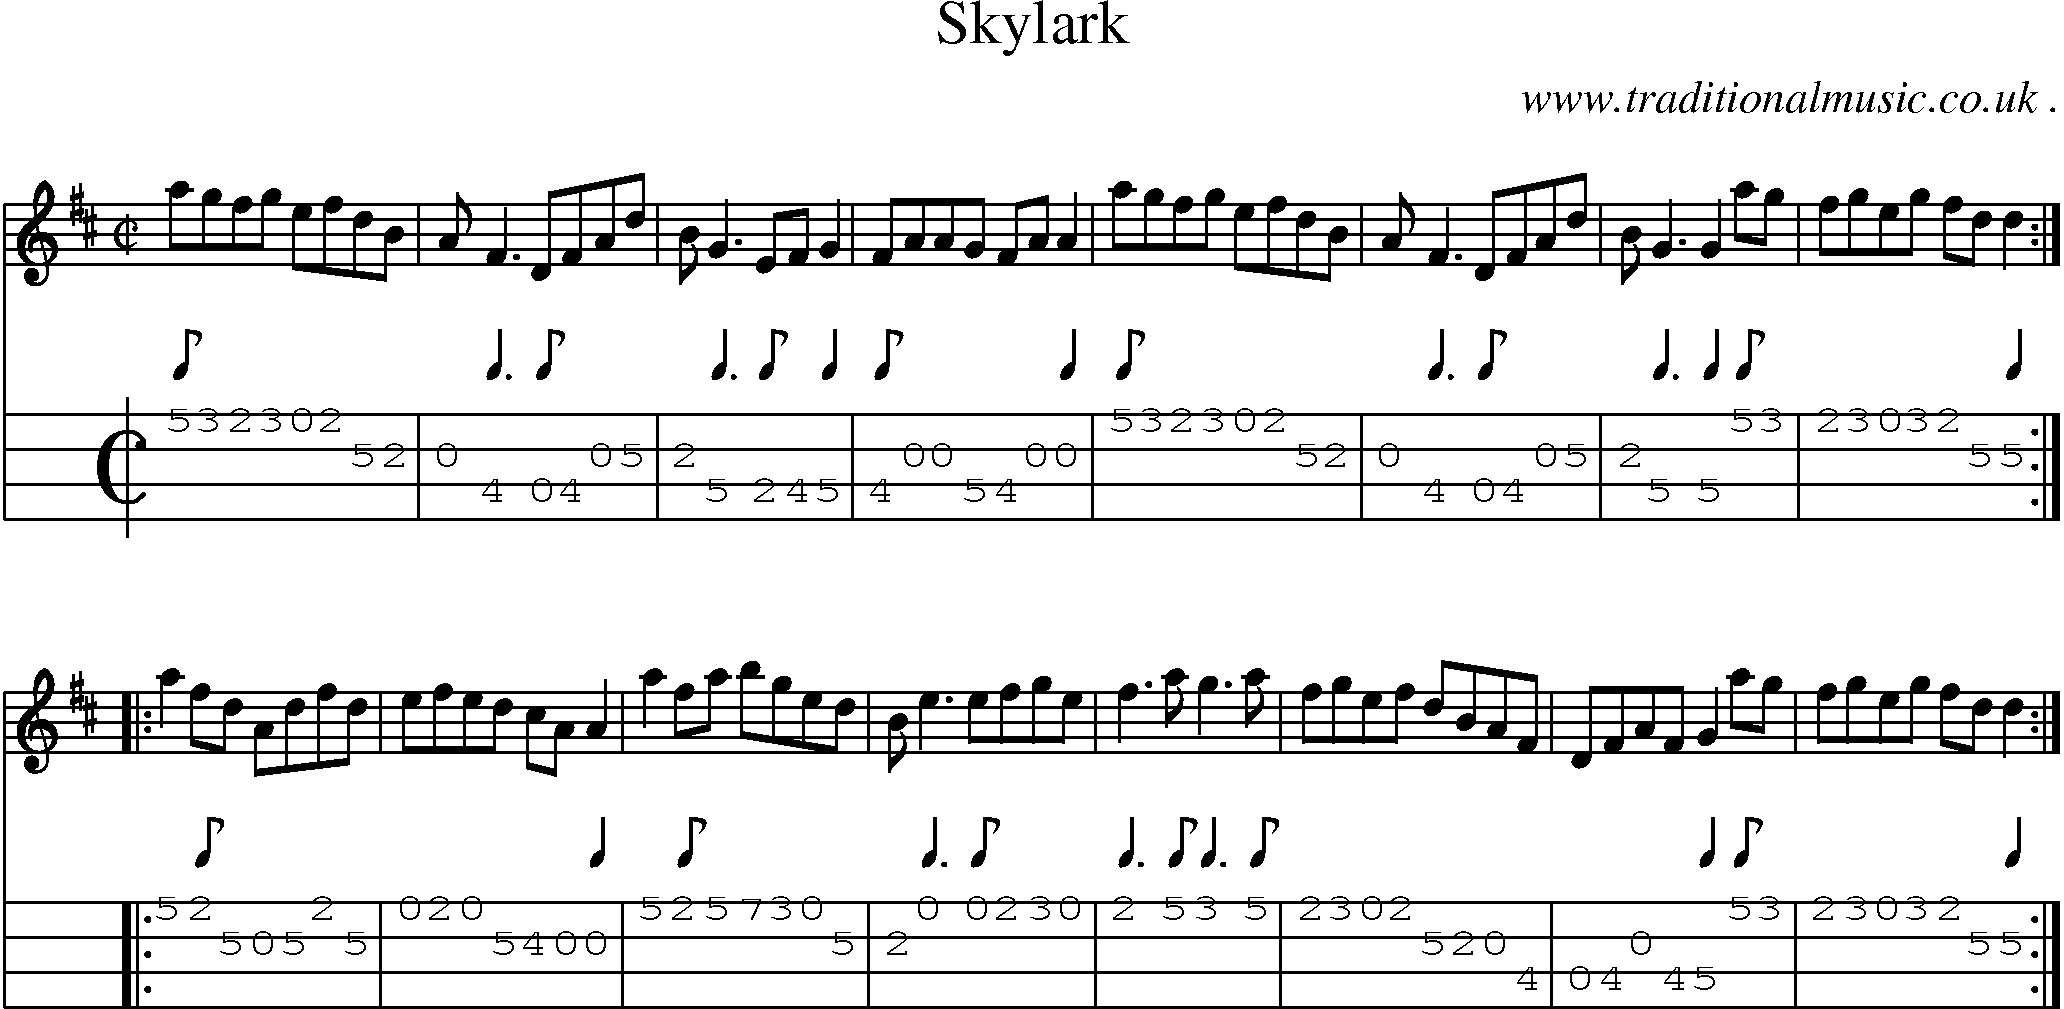 Sheet-Music and Mandolin Tabs for Skylark